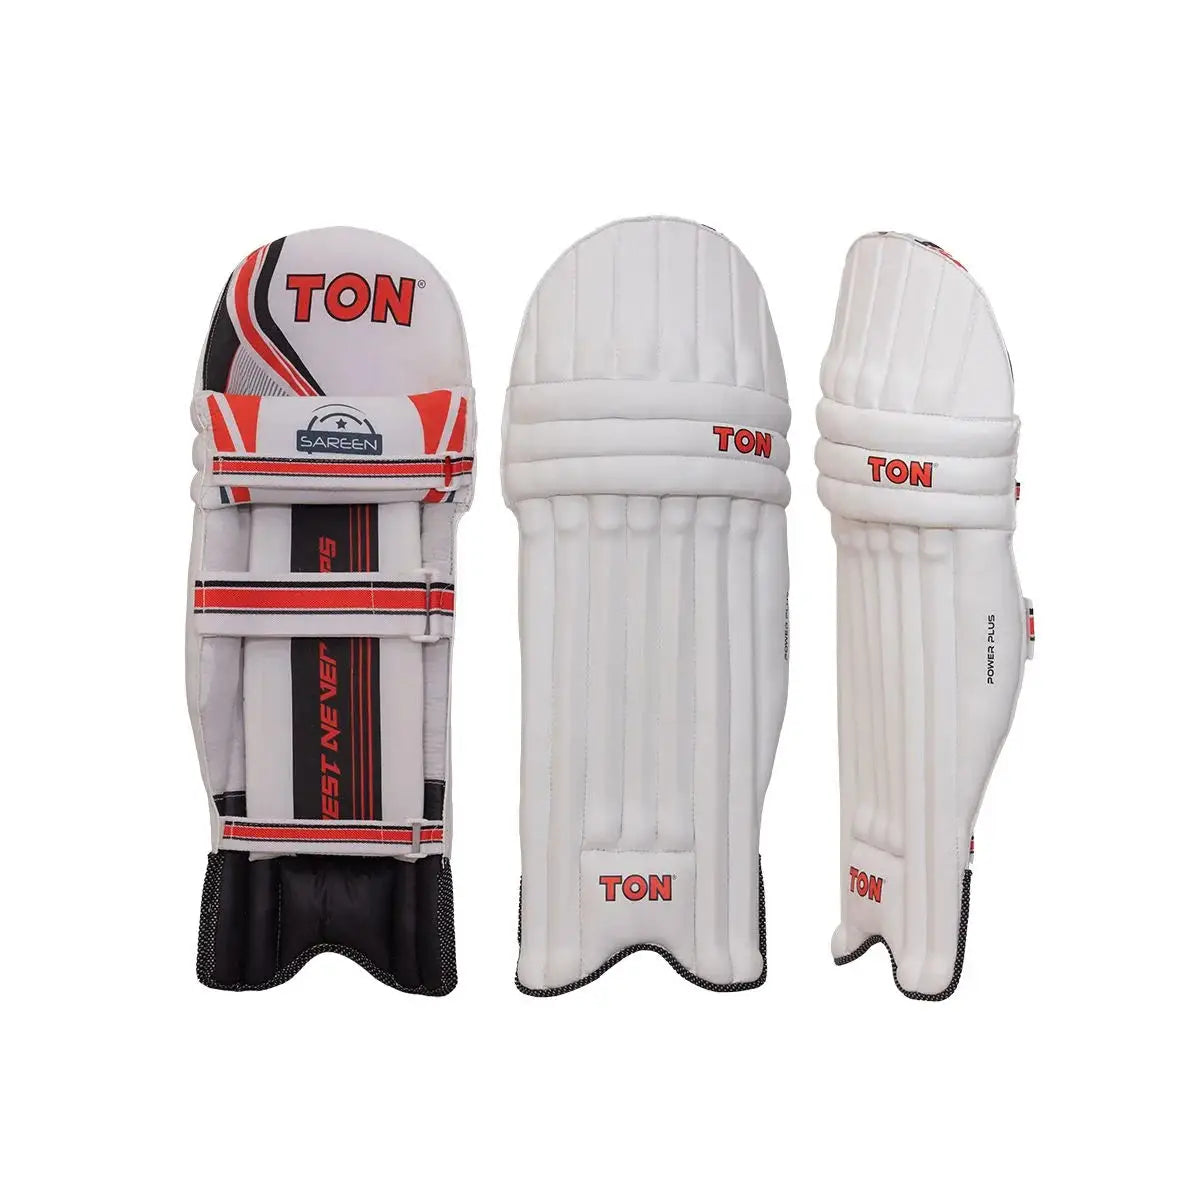 Cricket Accessories - Shop Cricket Kits, Bat Grips, Cricket Sets, Bowling  Machines, Wickets & Cricket Match Accessories